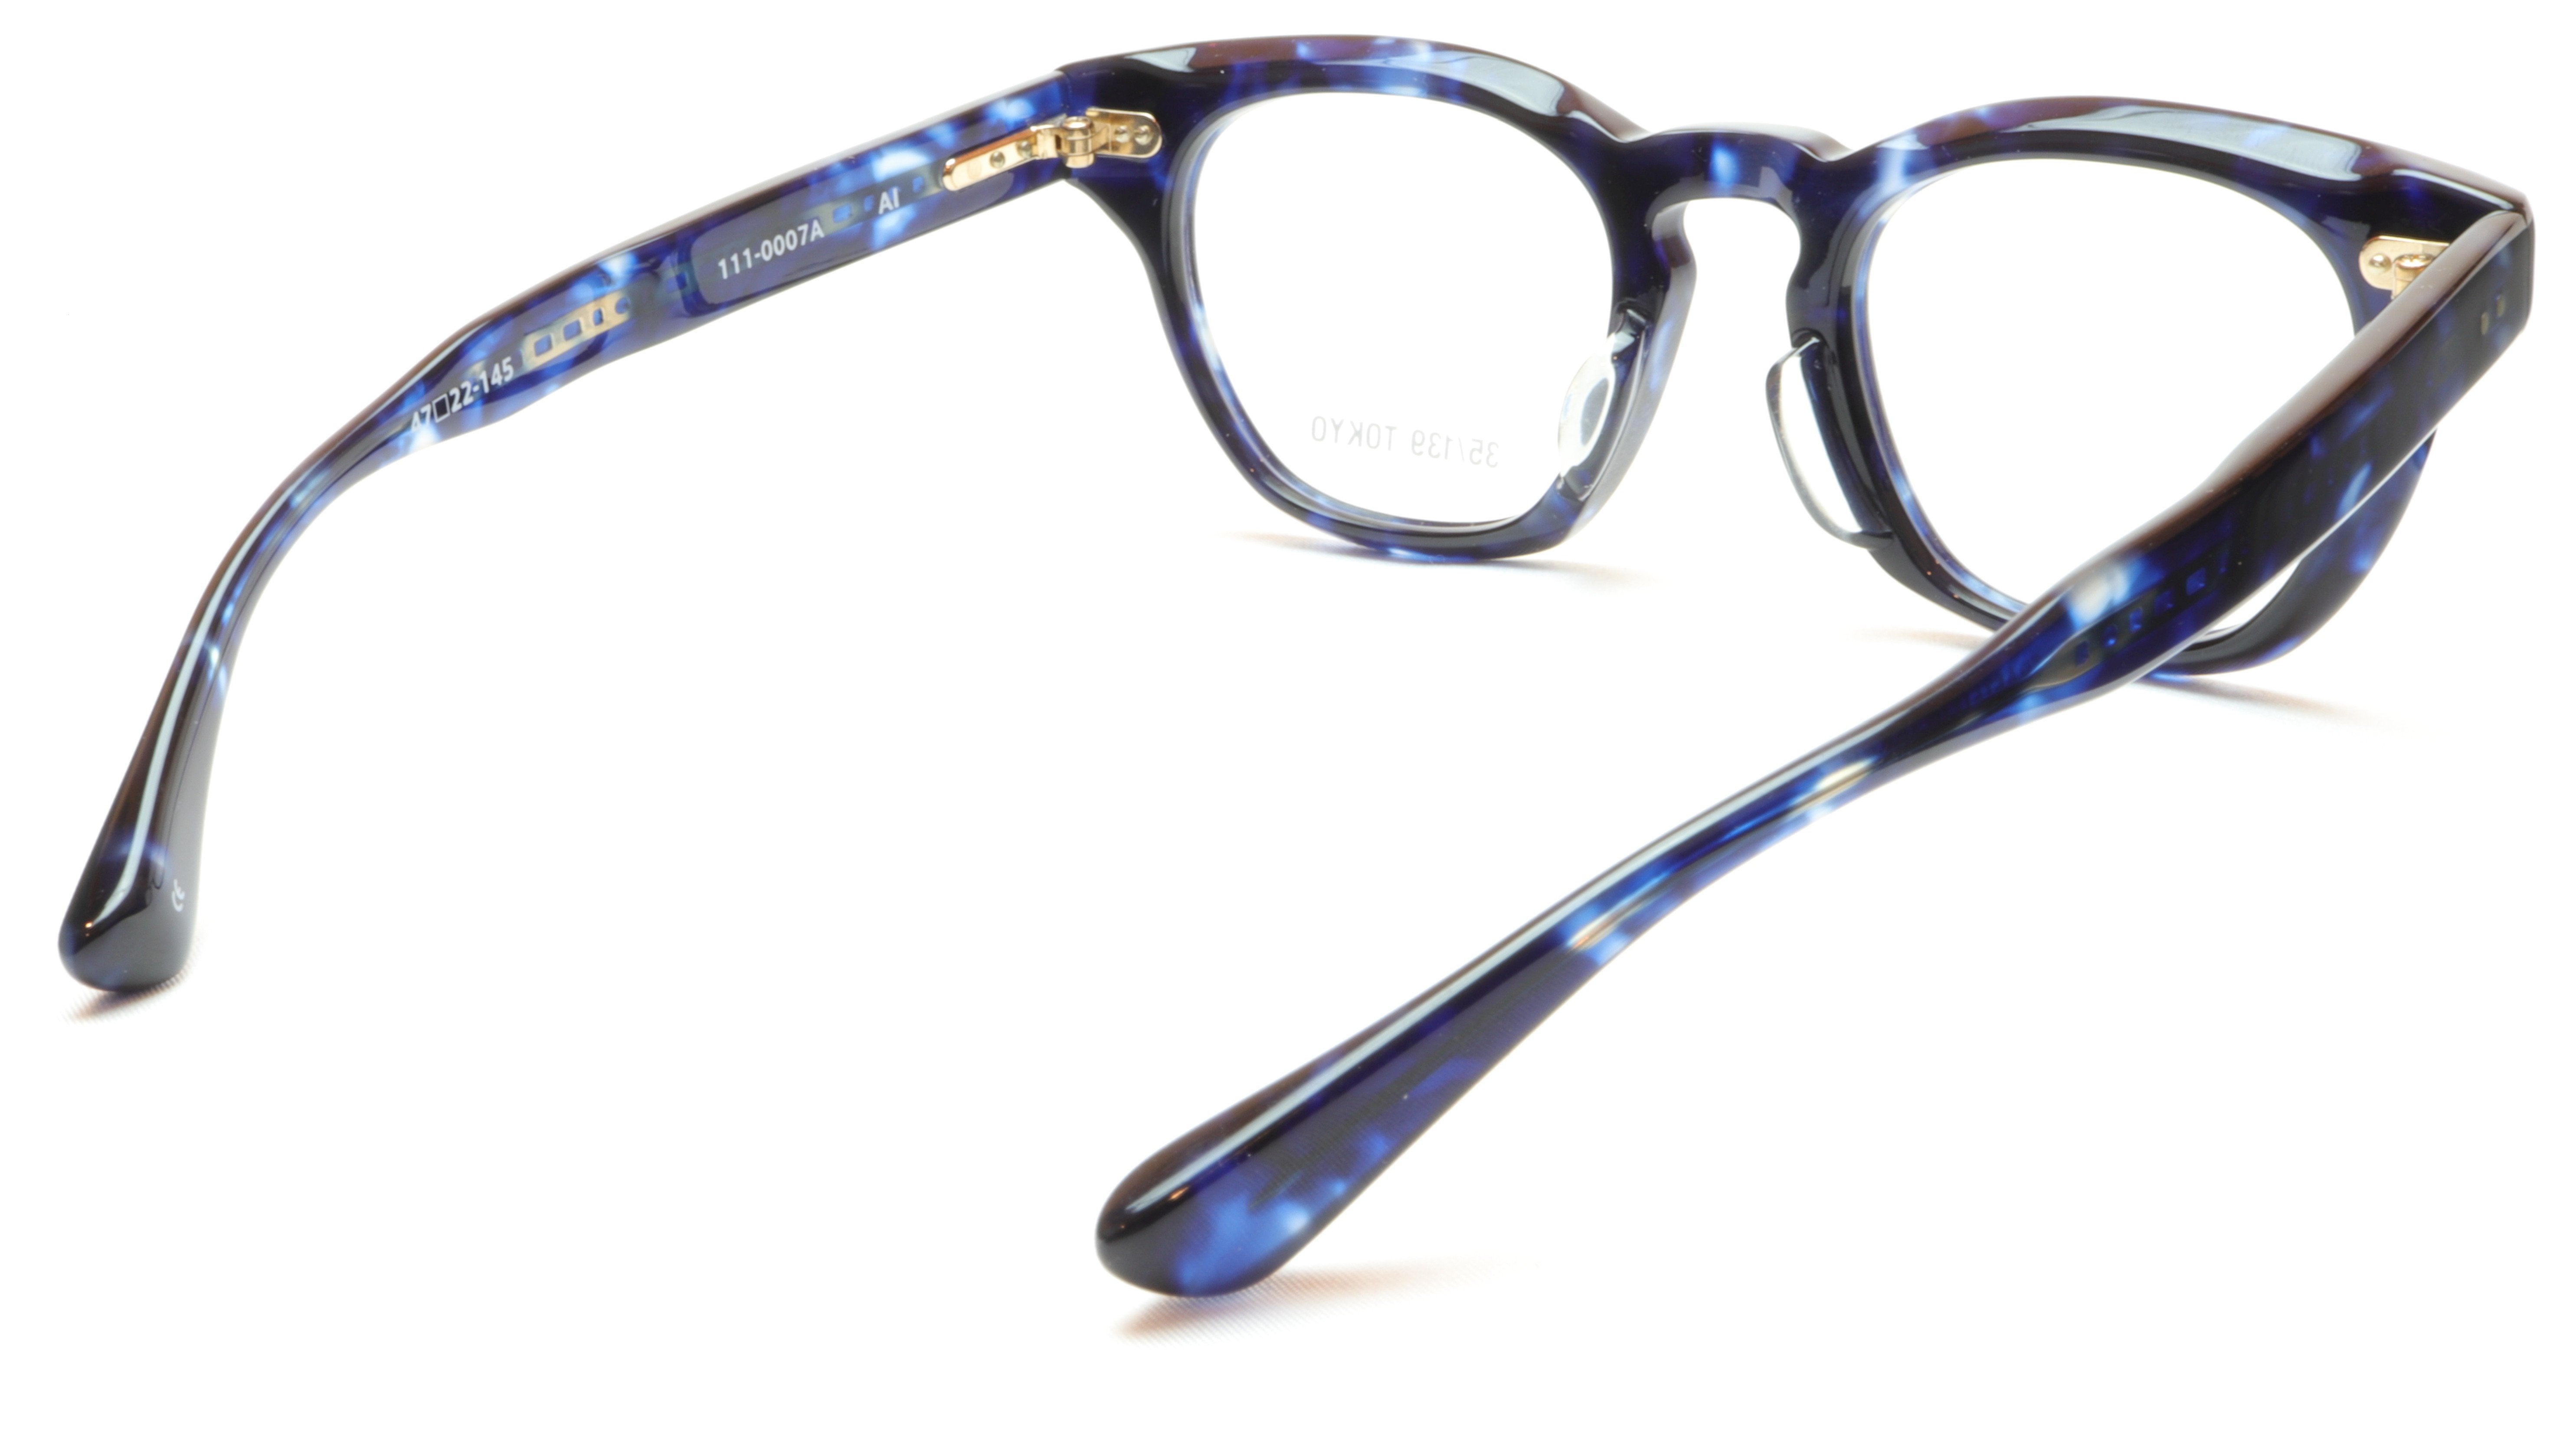 35/139 Tokyo AI 111-0007A Eyeglasses Frame Crystal Blue 47-22-145 